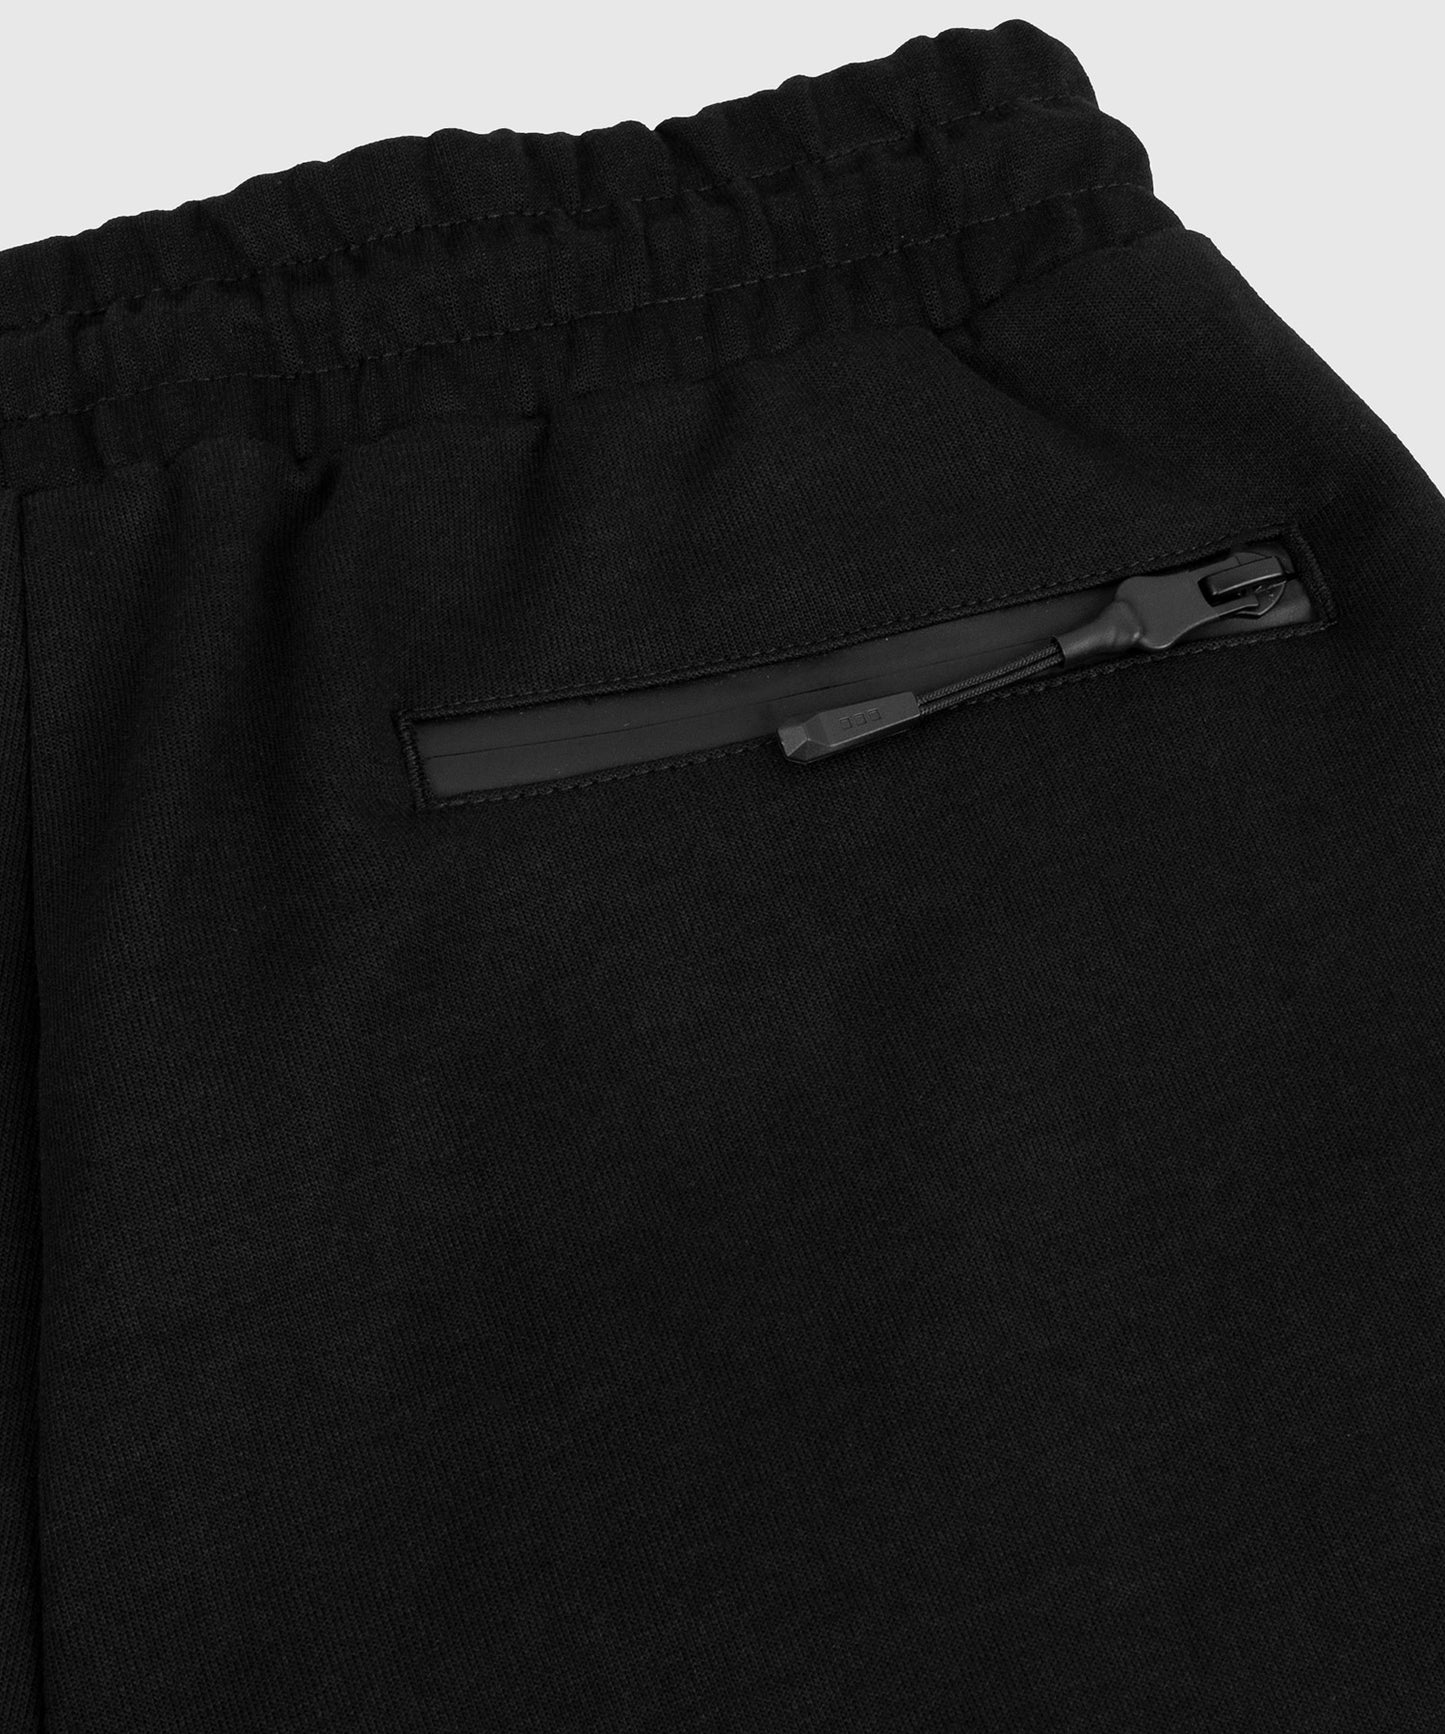 Pantalones Venum Laser 2.0 - Negro/Rojo